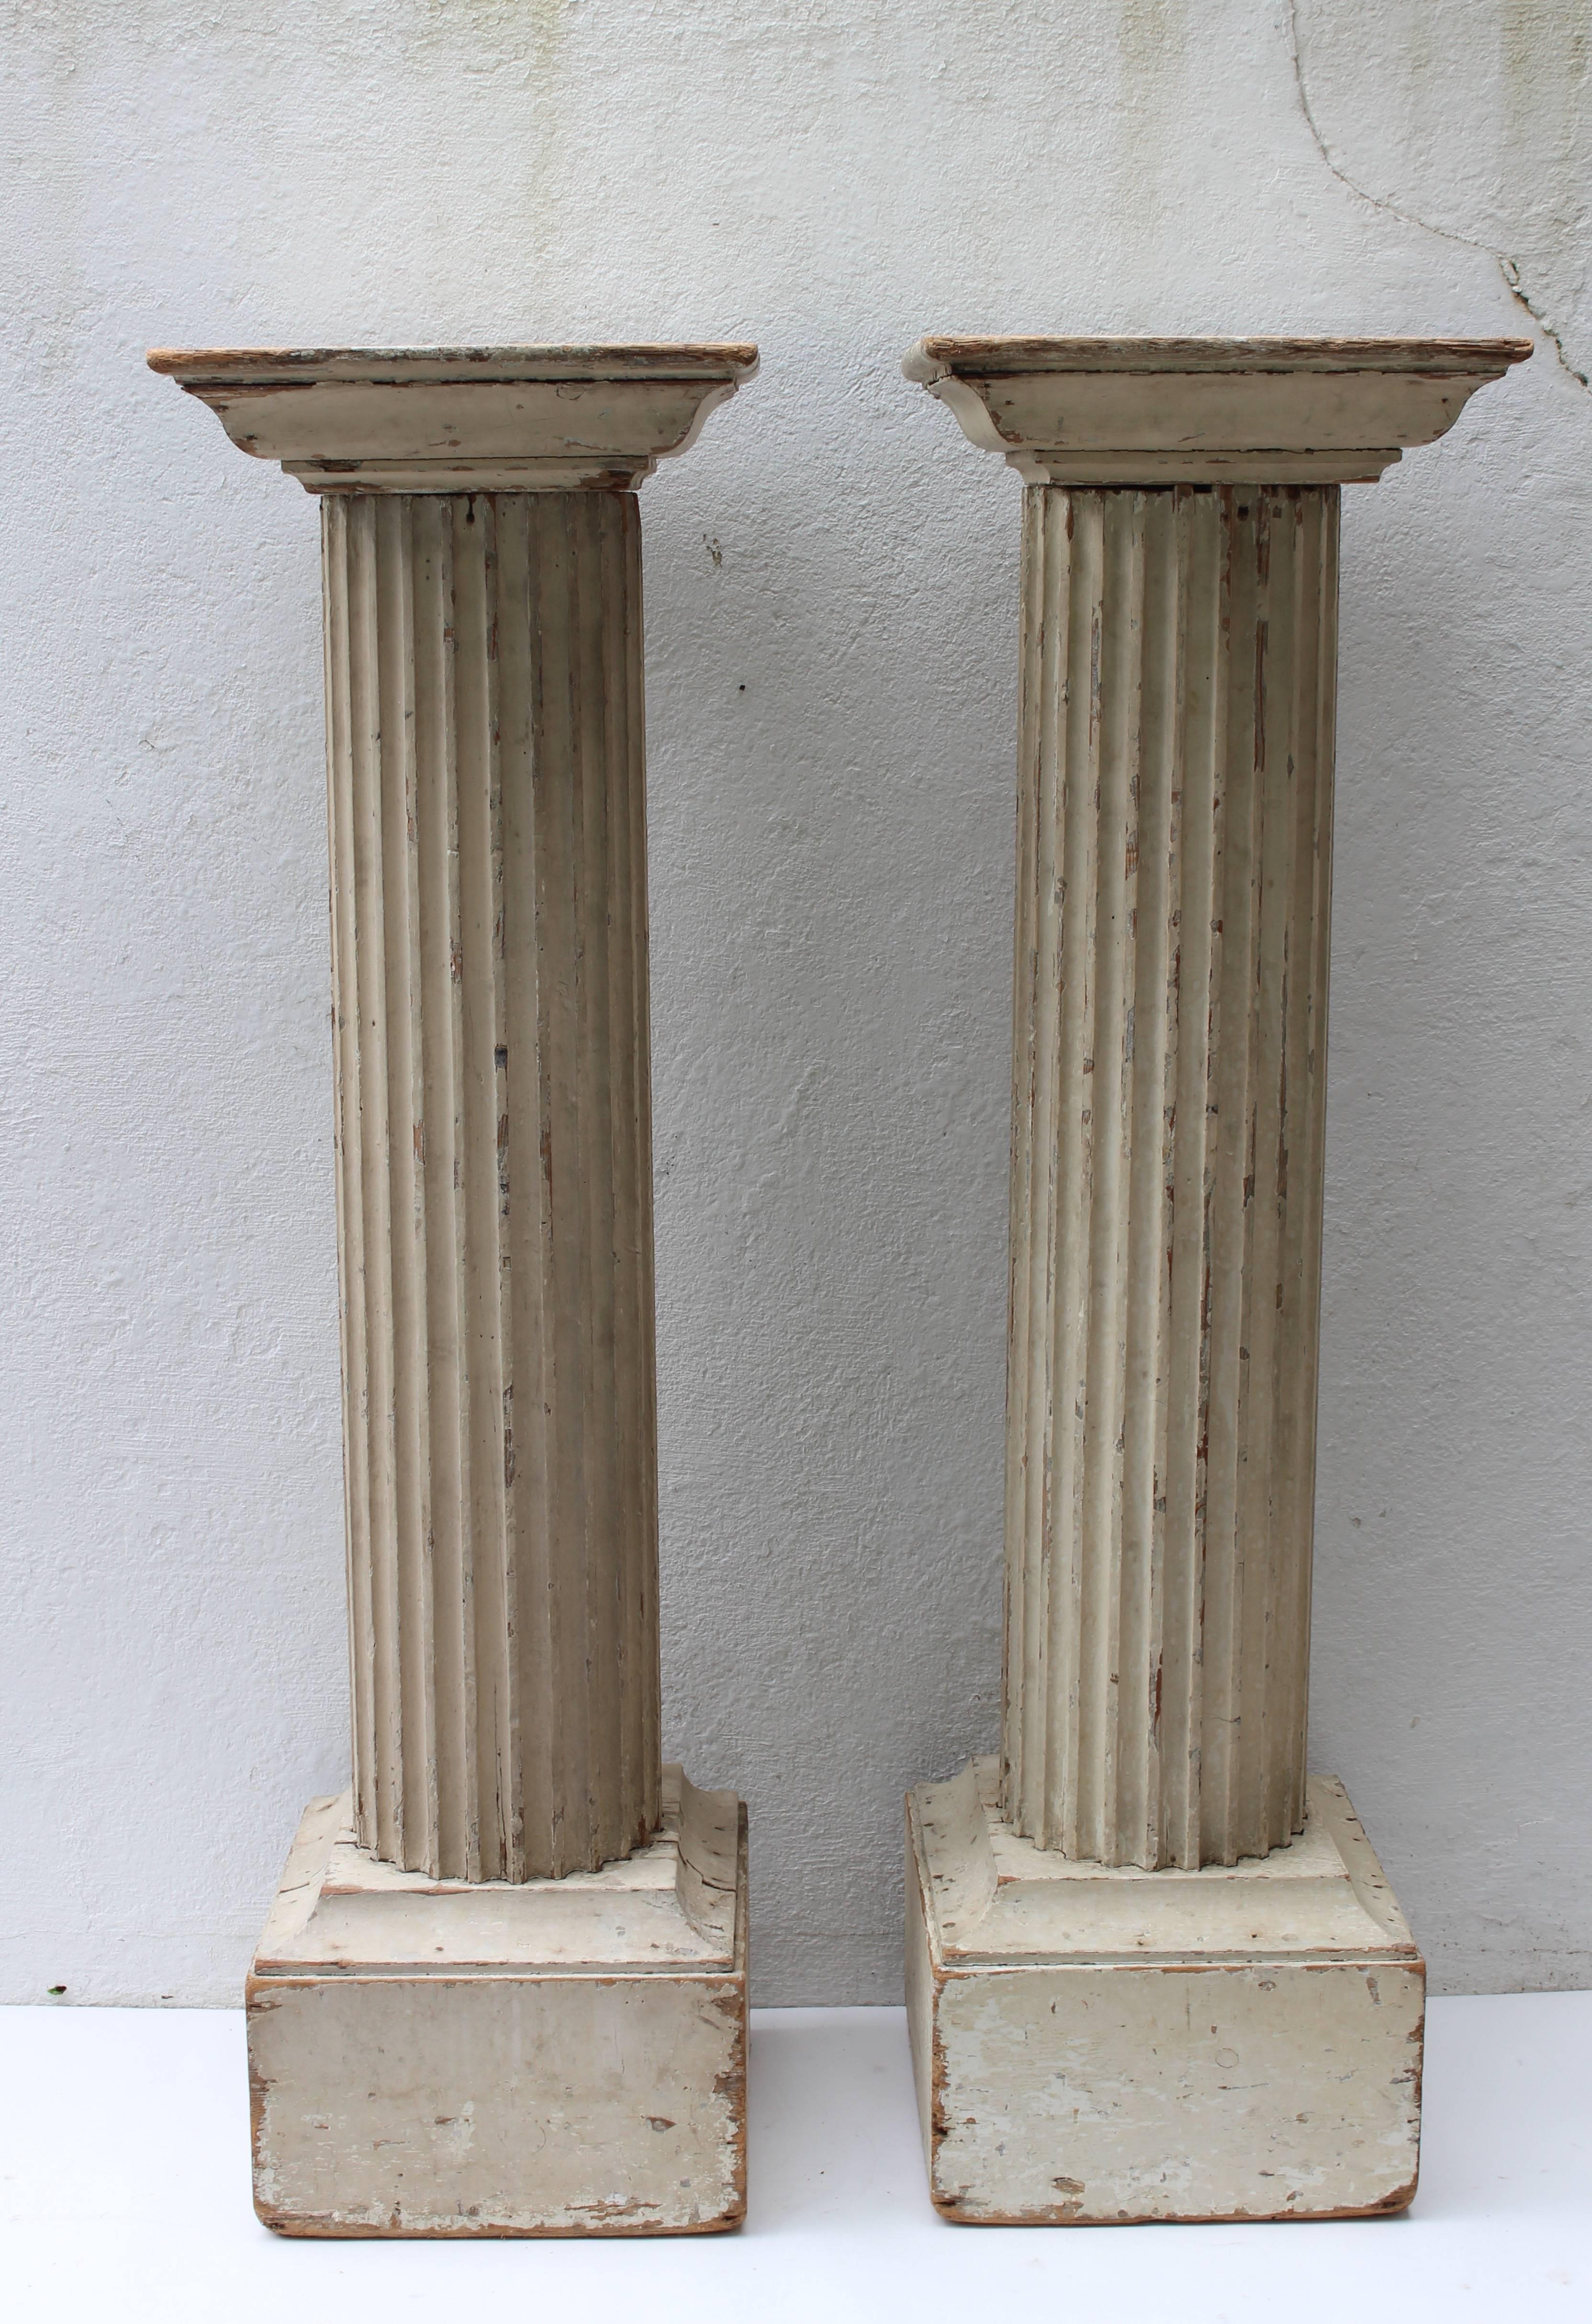 Pair of large 19th century painted Doric columns.
Measure: Top of each column measures 16.5